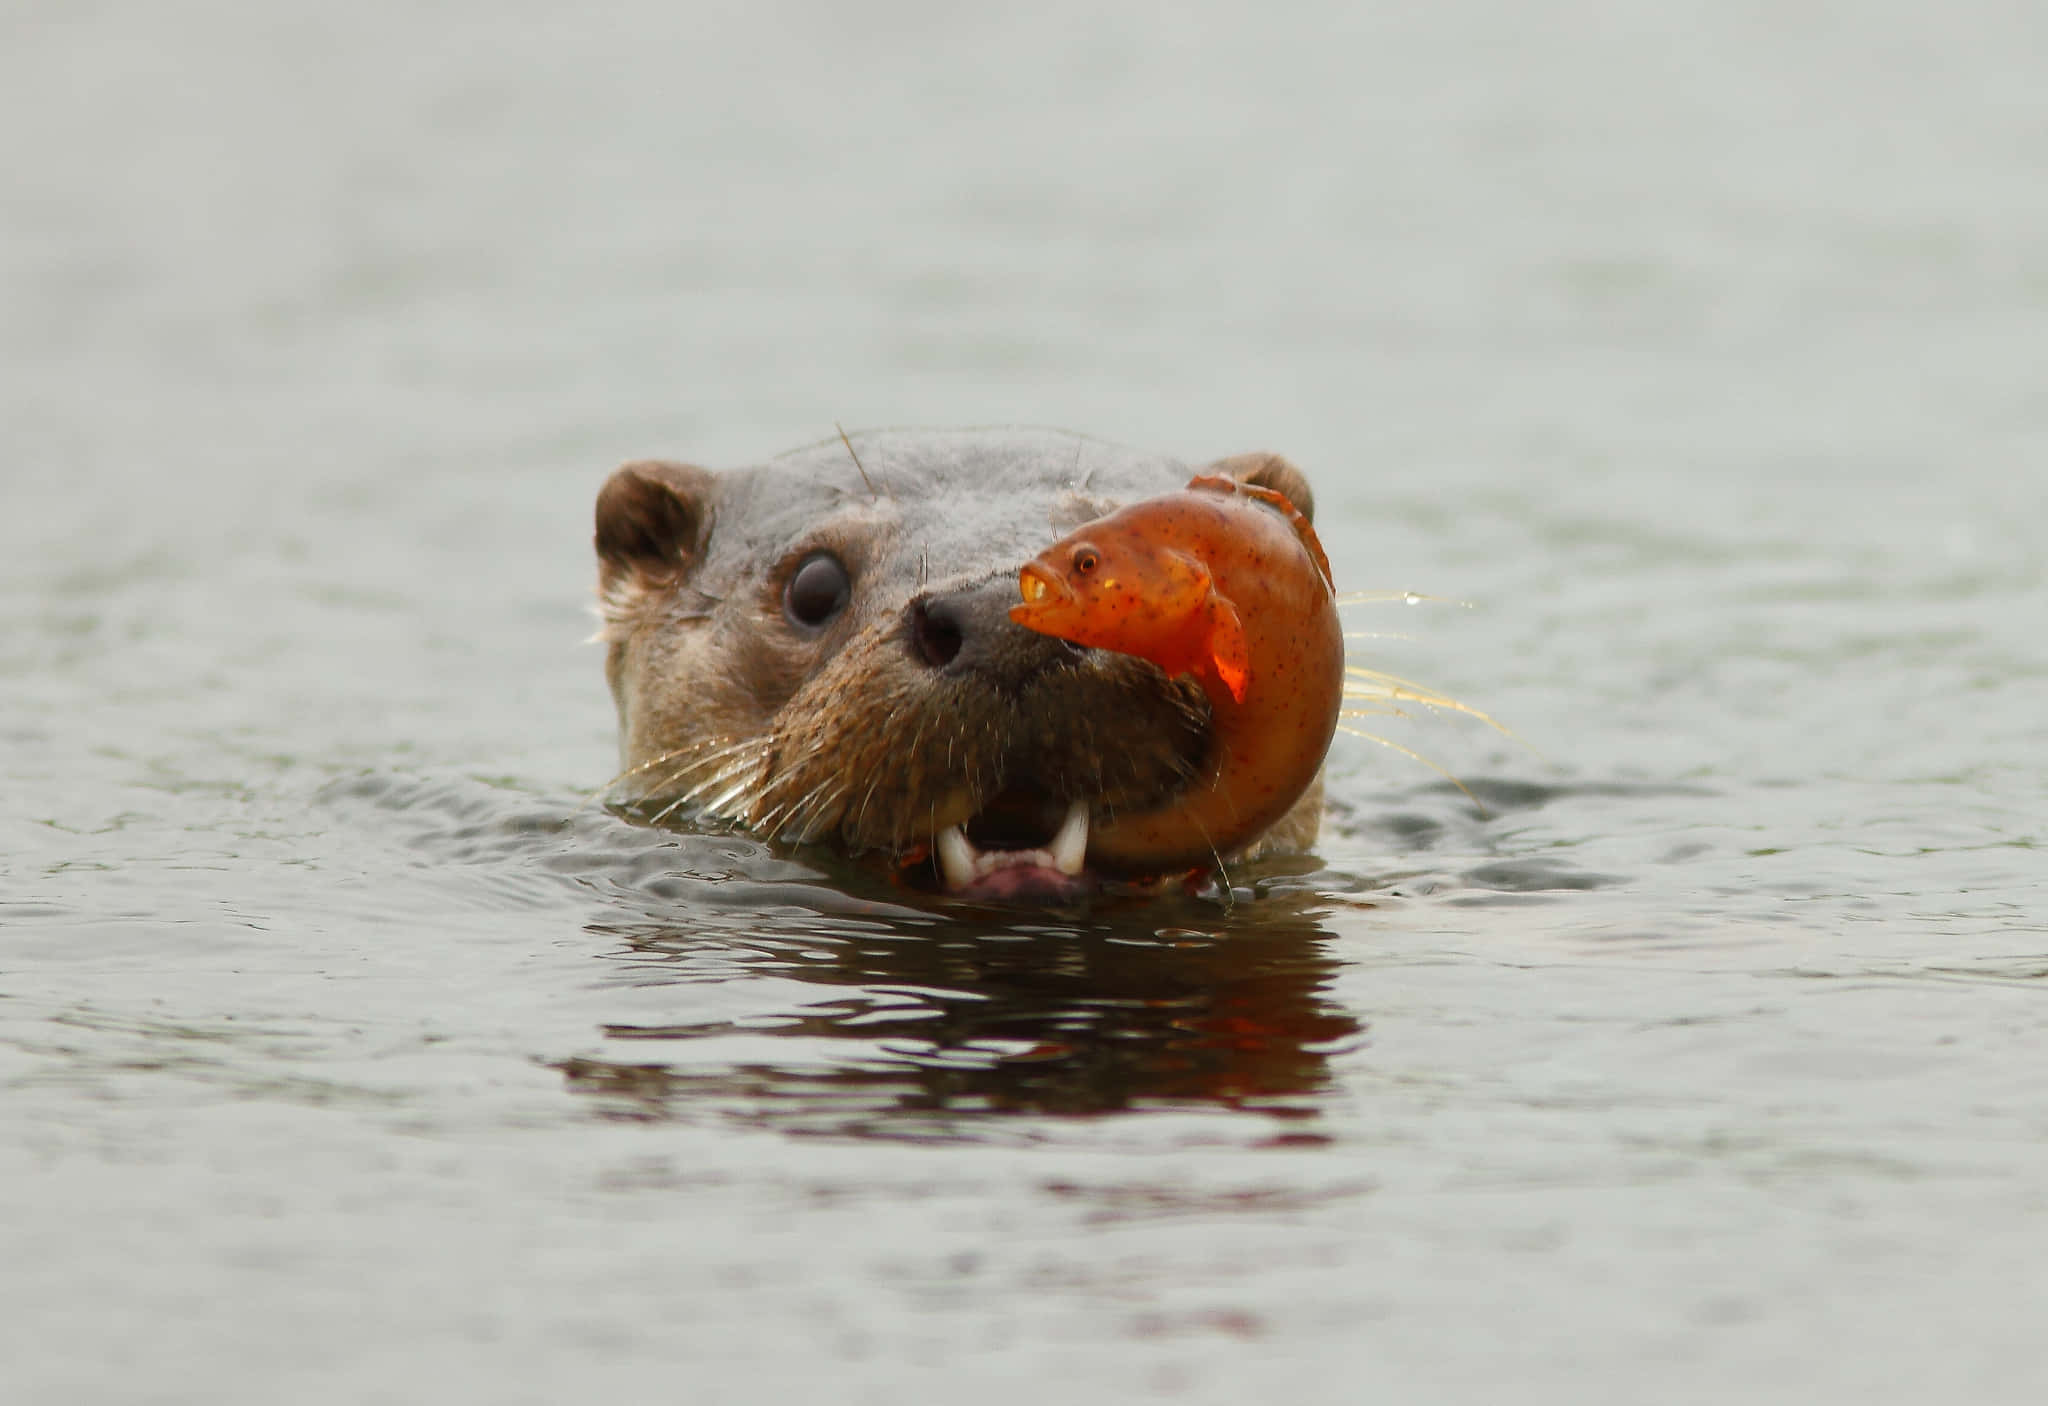 An adorably playful Otter